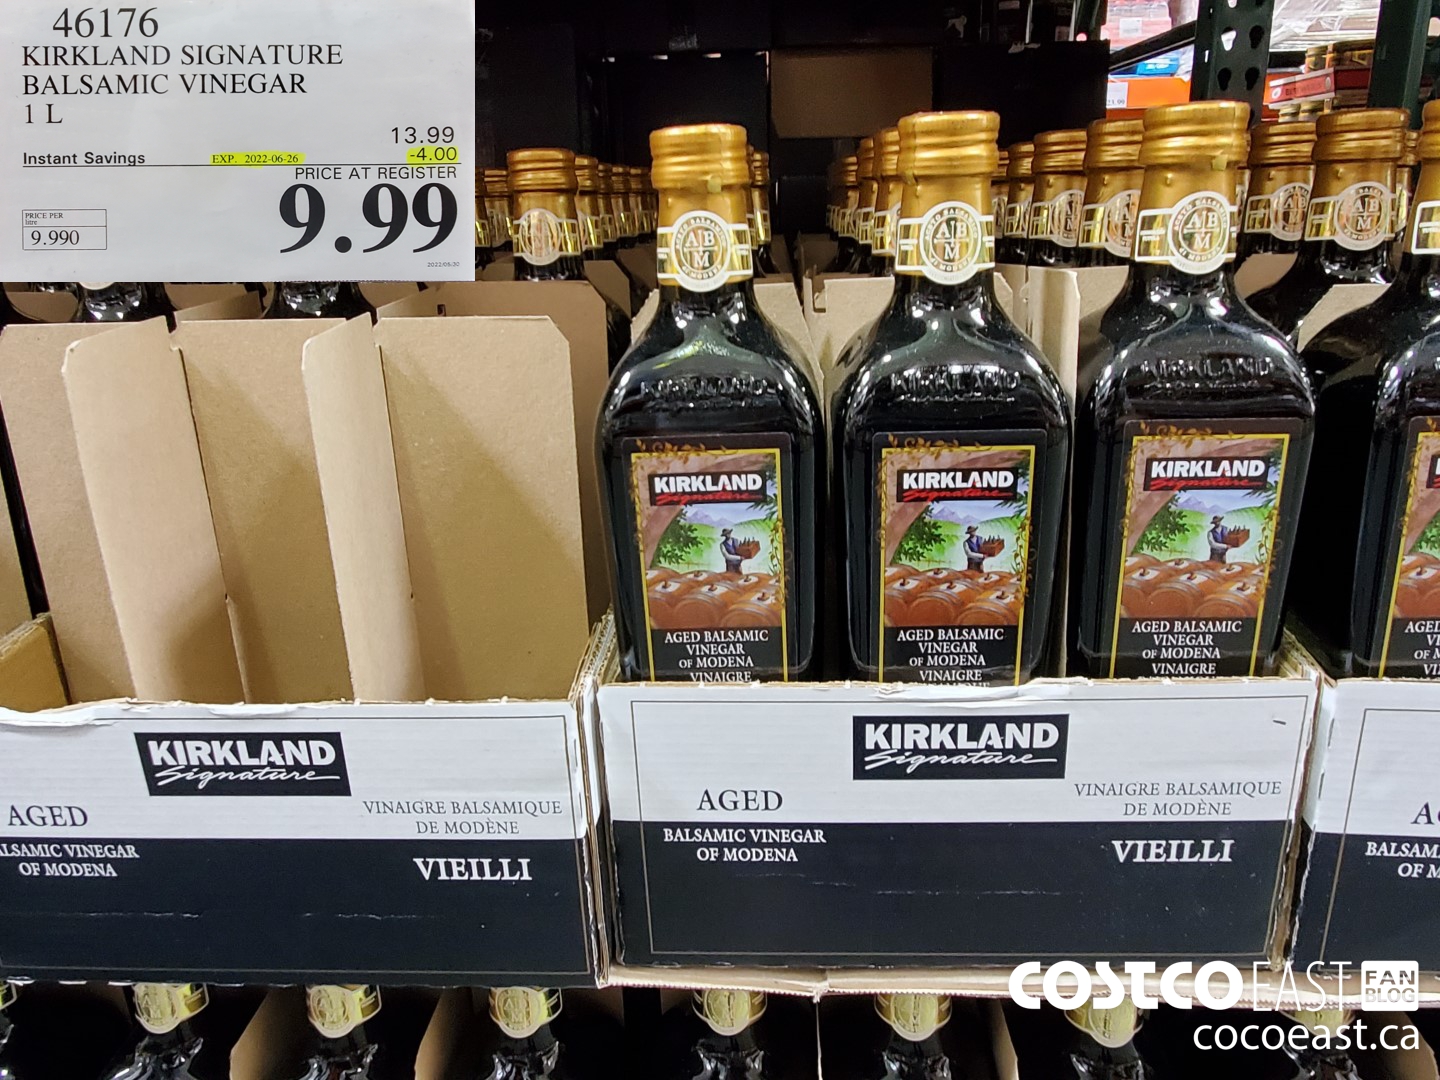 Kirkland Signature Balsamic Vinegar of Modena, 1 L